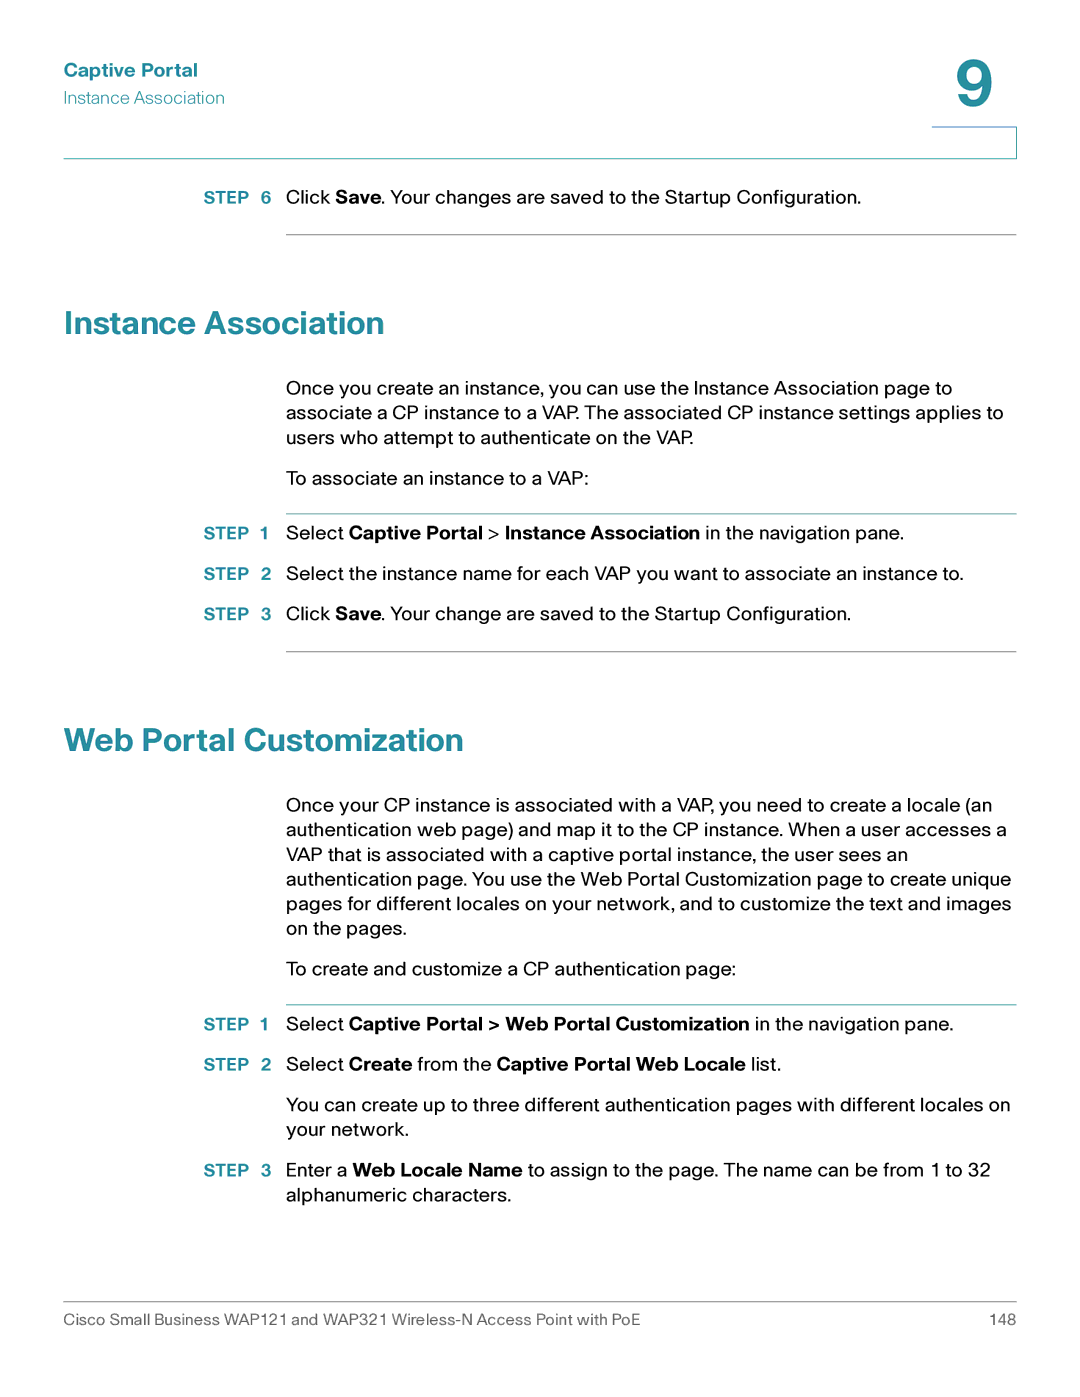 Cisco Systems WAP121, WAP321 manual Instance Association, Web Portal Customization 